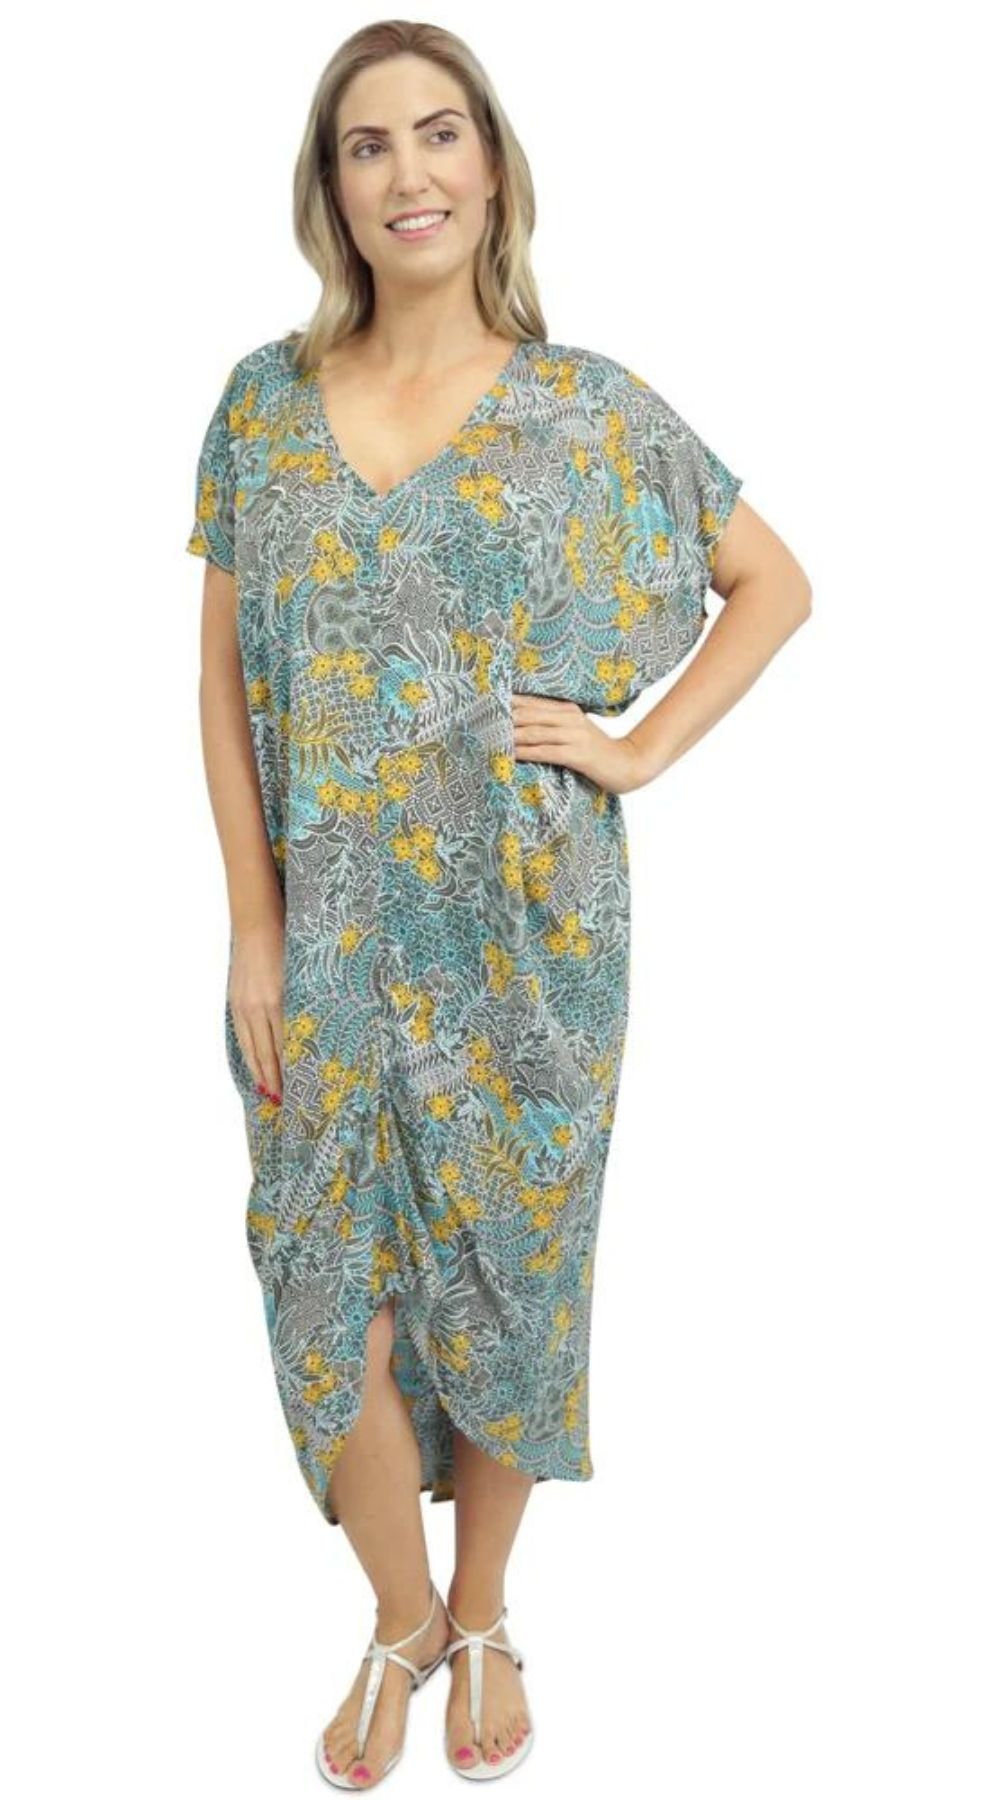 Frilled Toga Dress Paisley Batik (Taupe) - Bare Essentials
Long dress